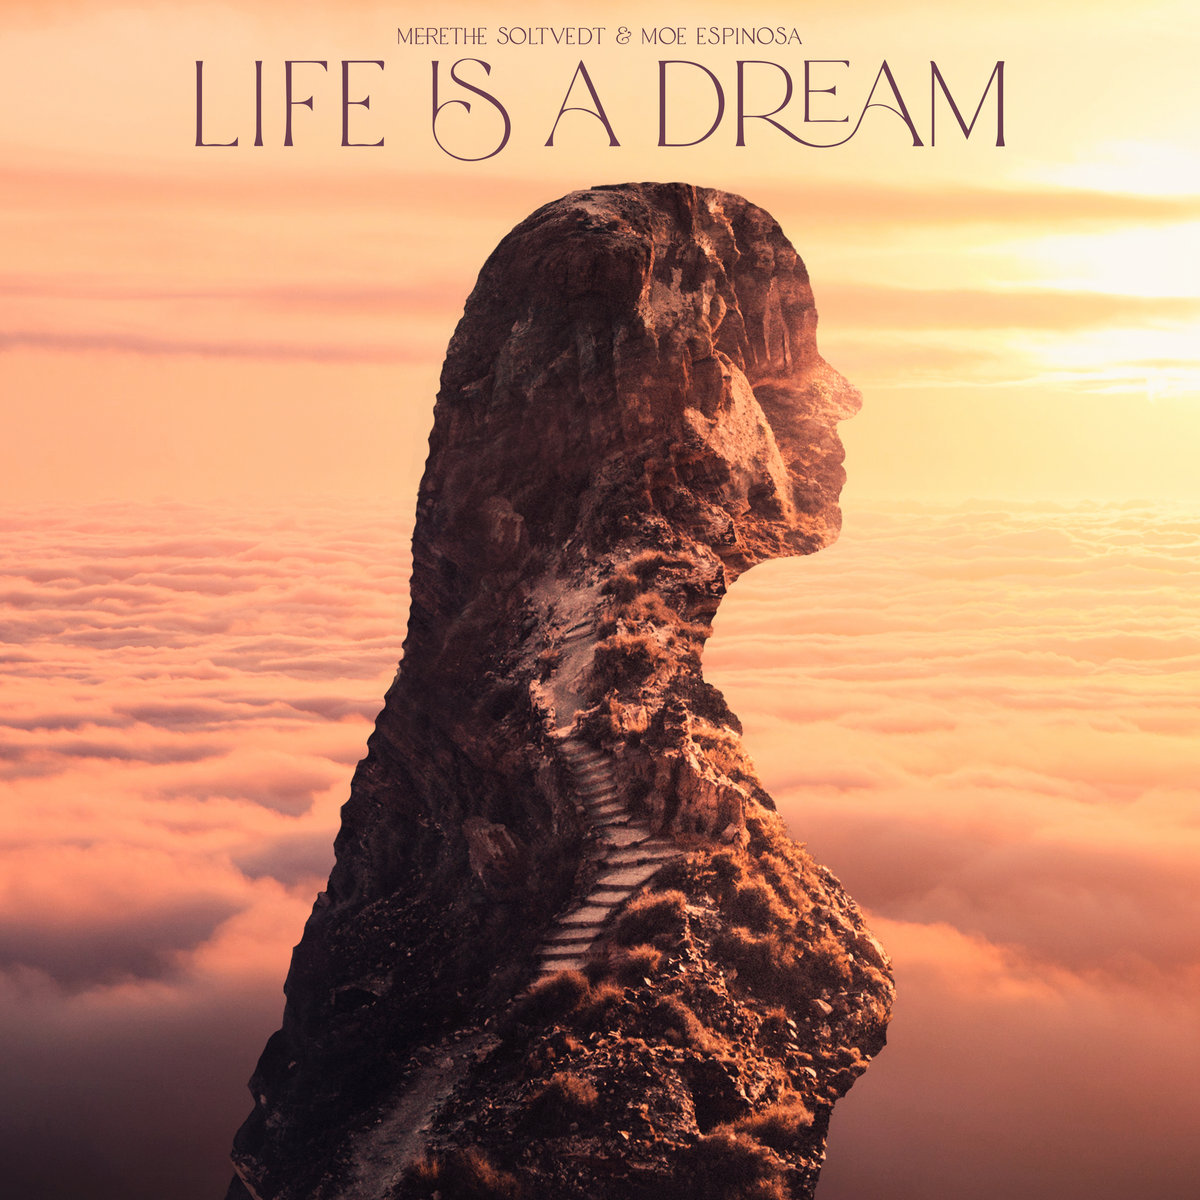 Merethe Soltvedt & Moe Espinosa – Life Is a Dream